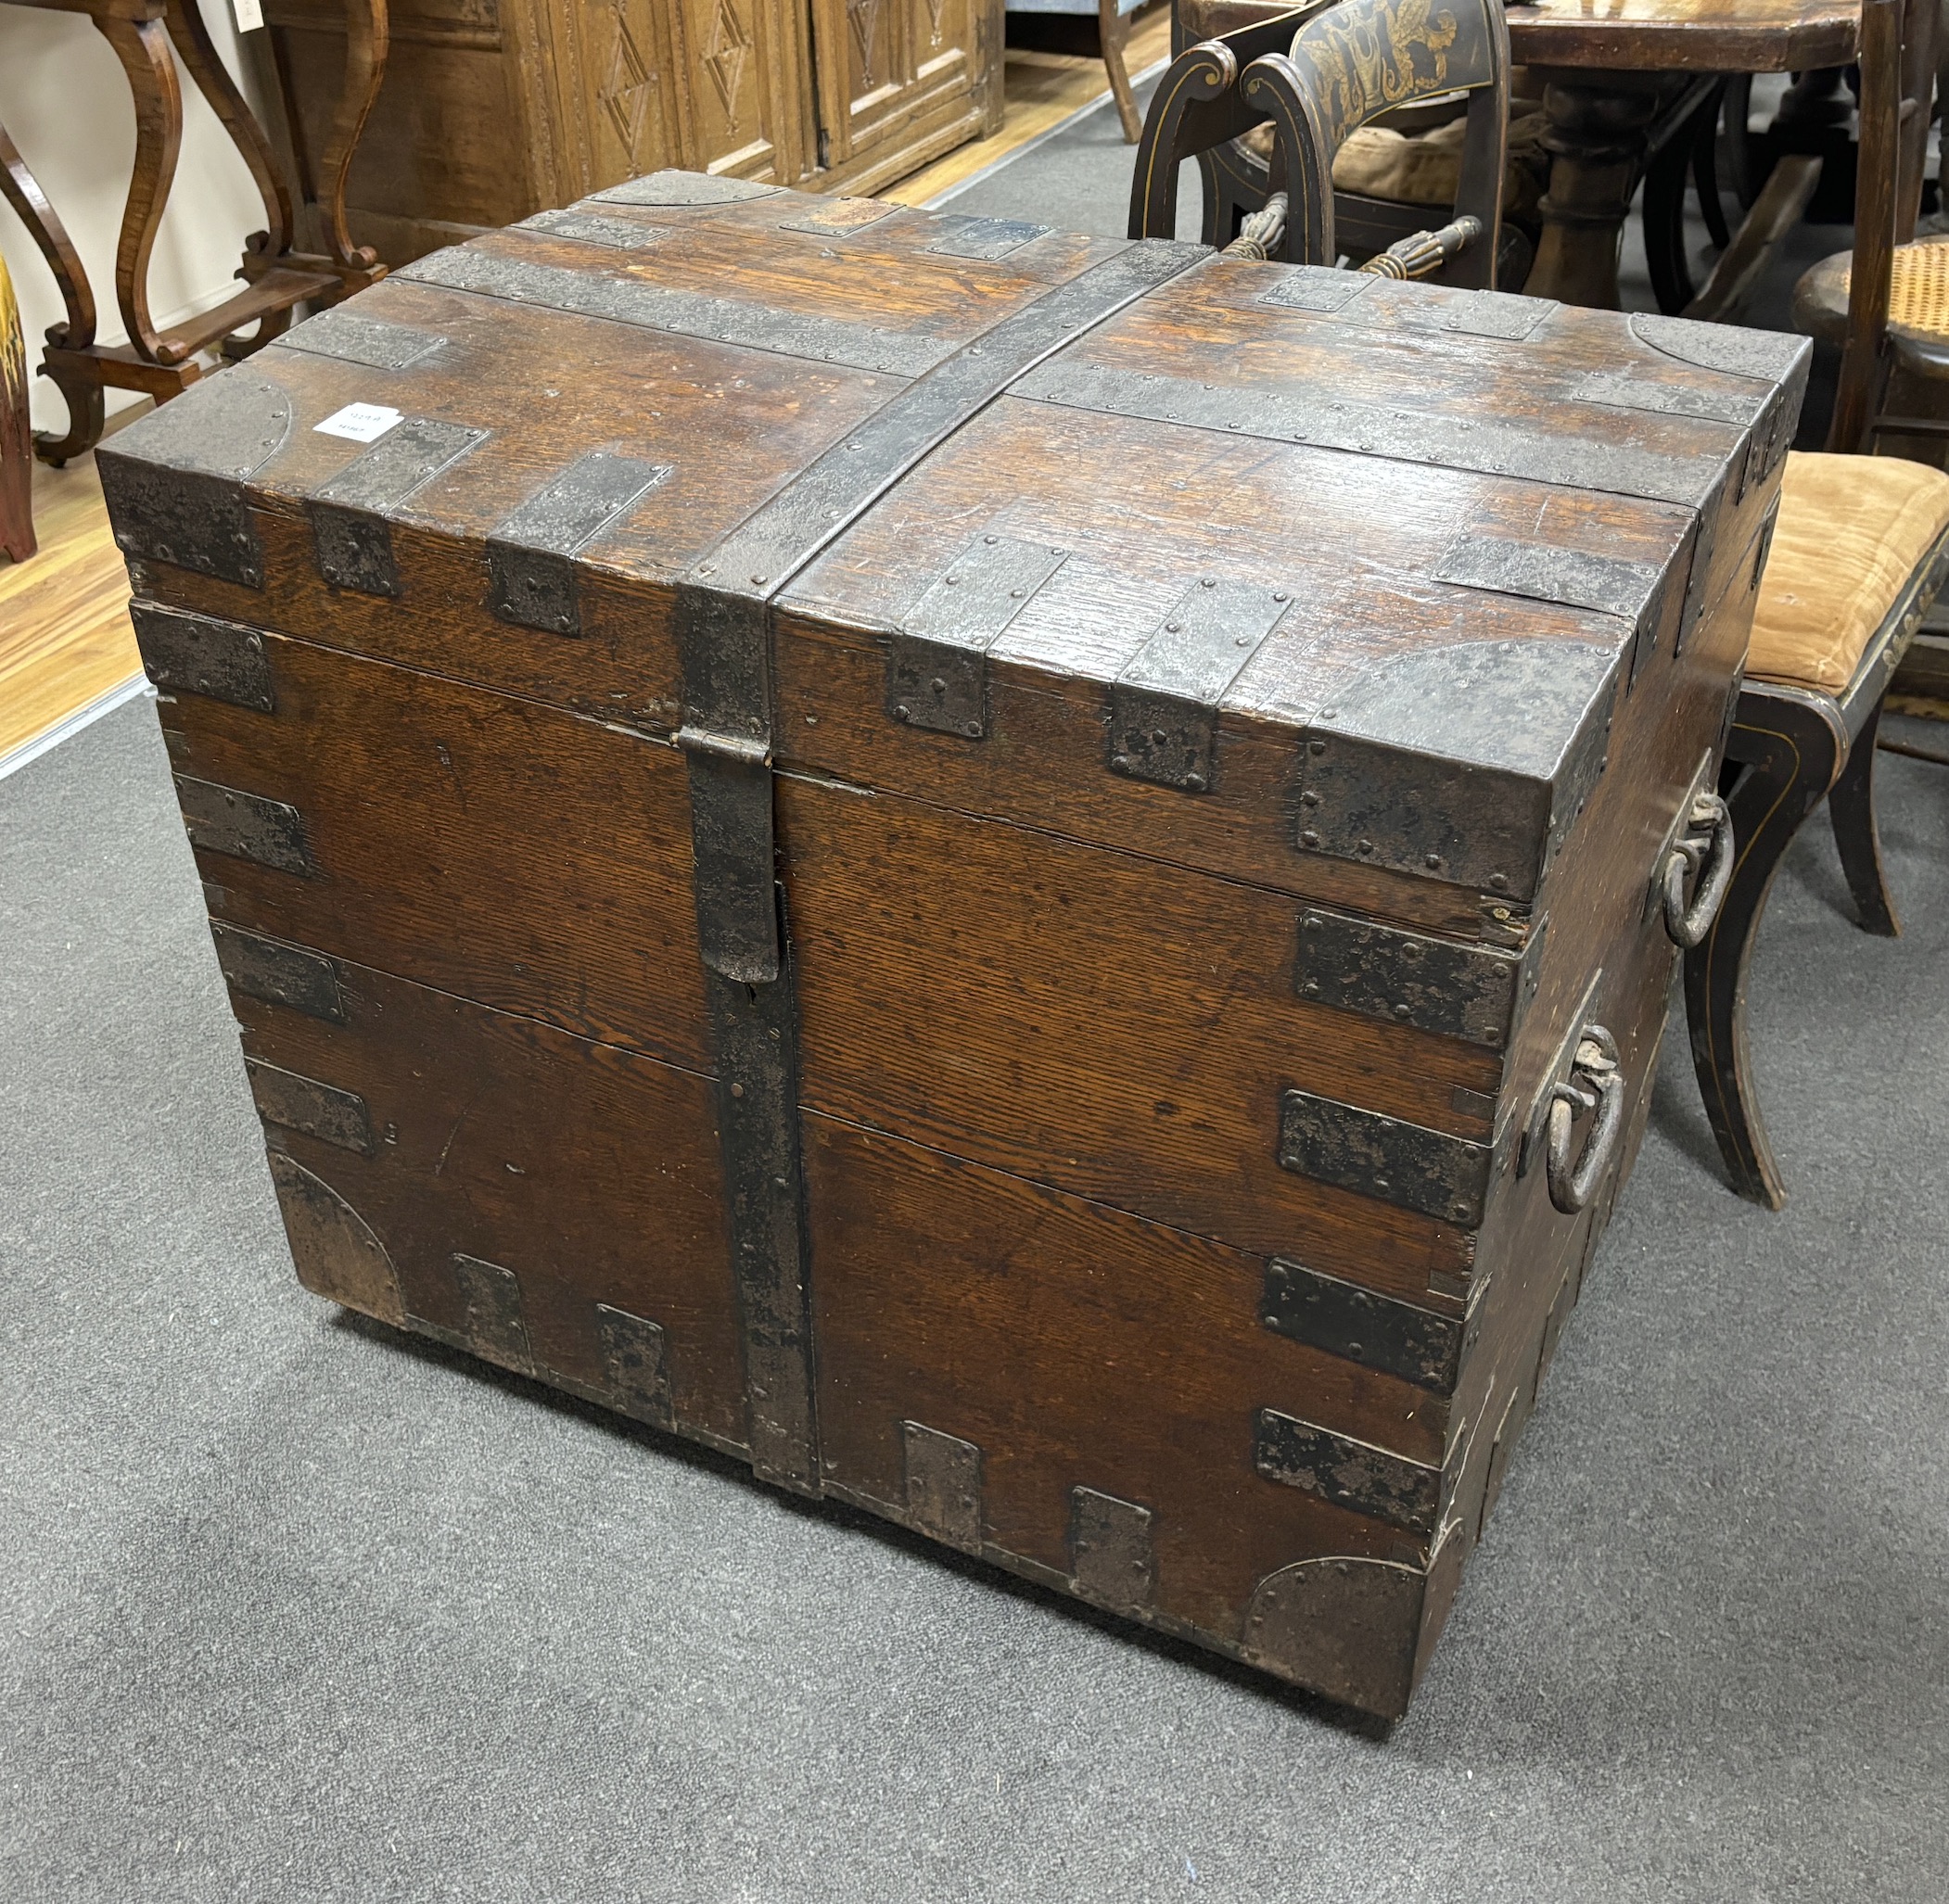 A Victorian oak and ironbound silver chest, width 84cm, depth 58cm, height 72cm